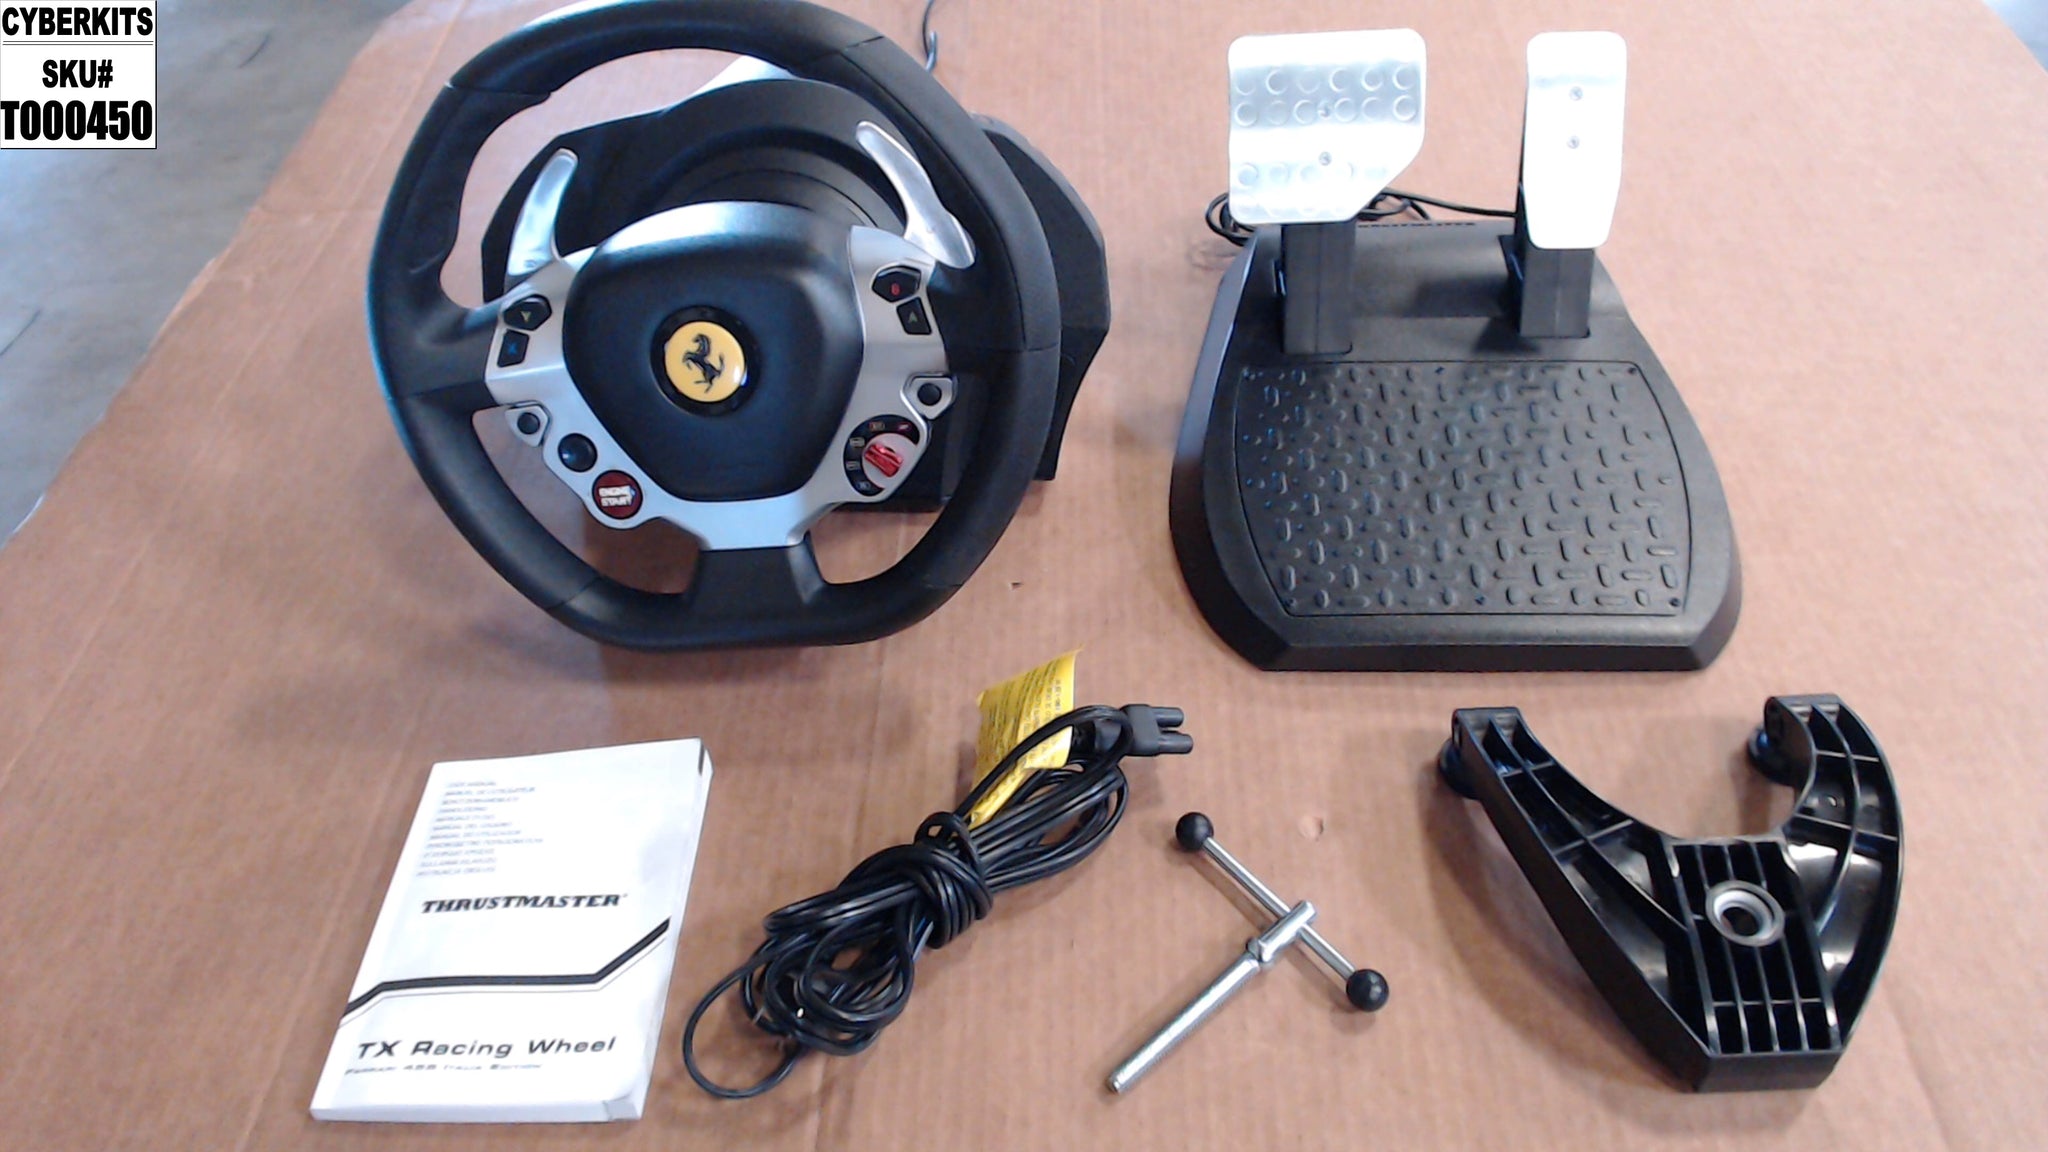 tx racing wheel ferrari 458 italia edition